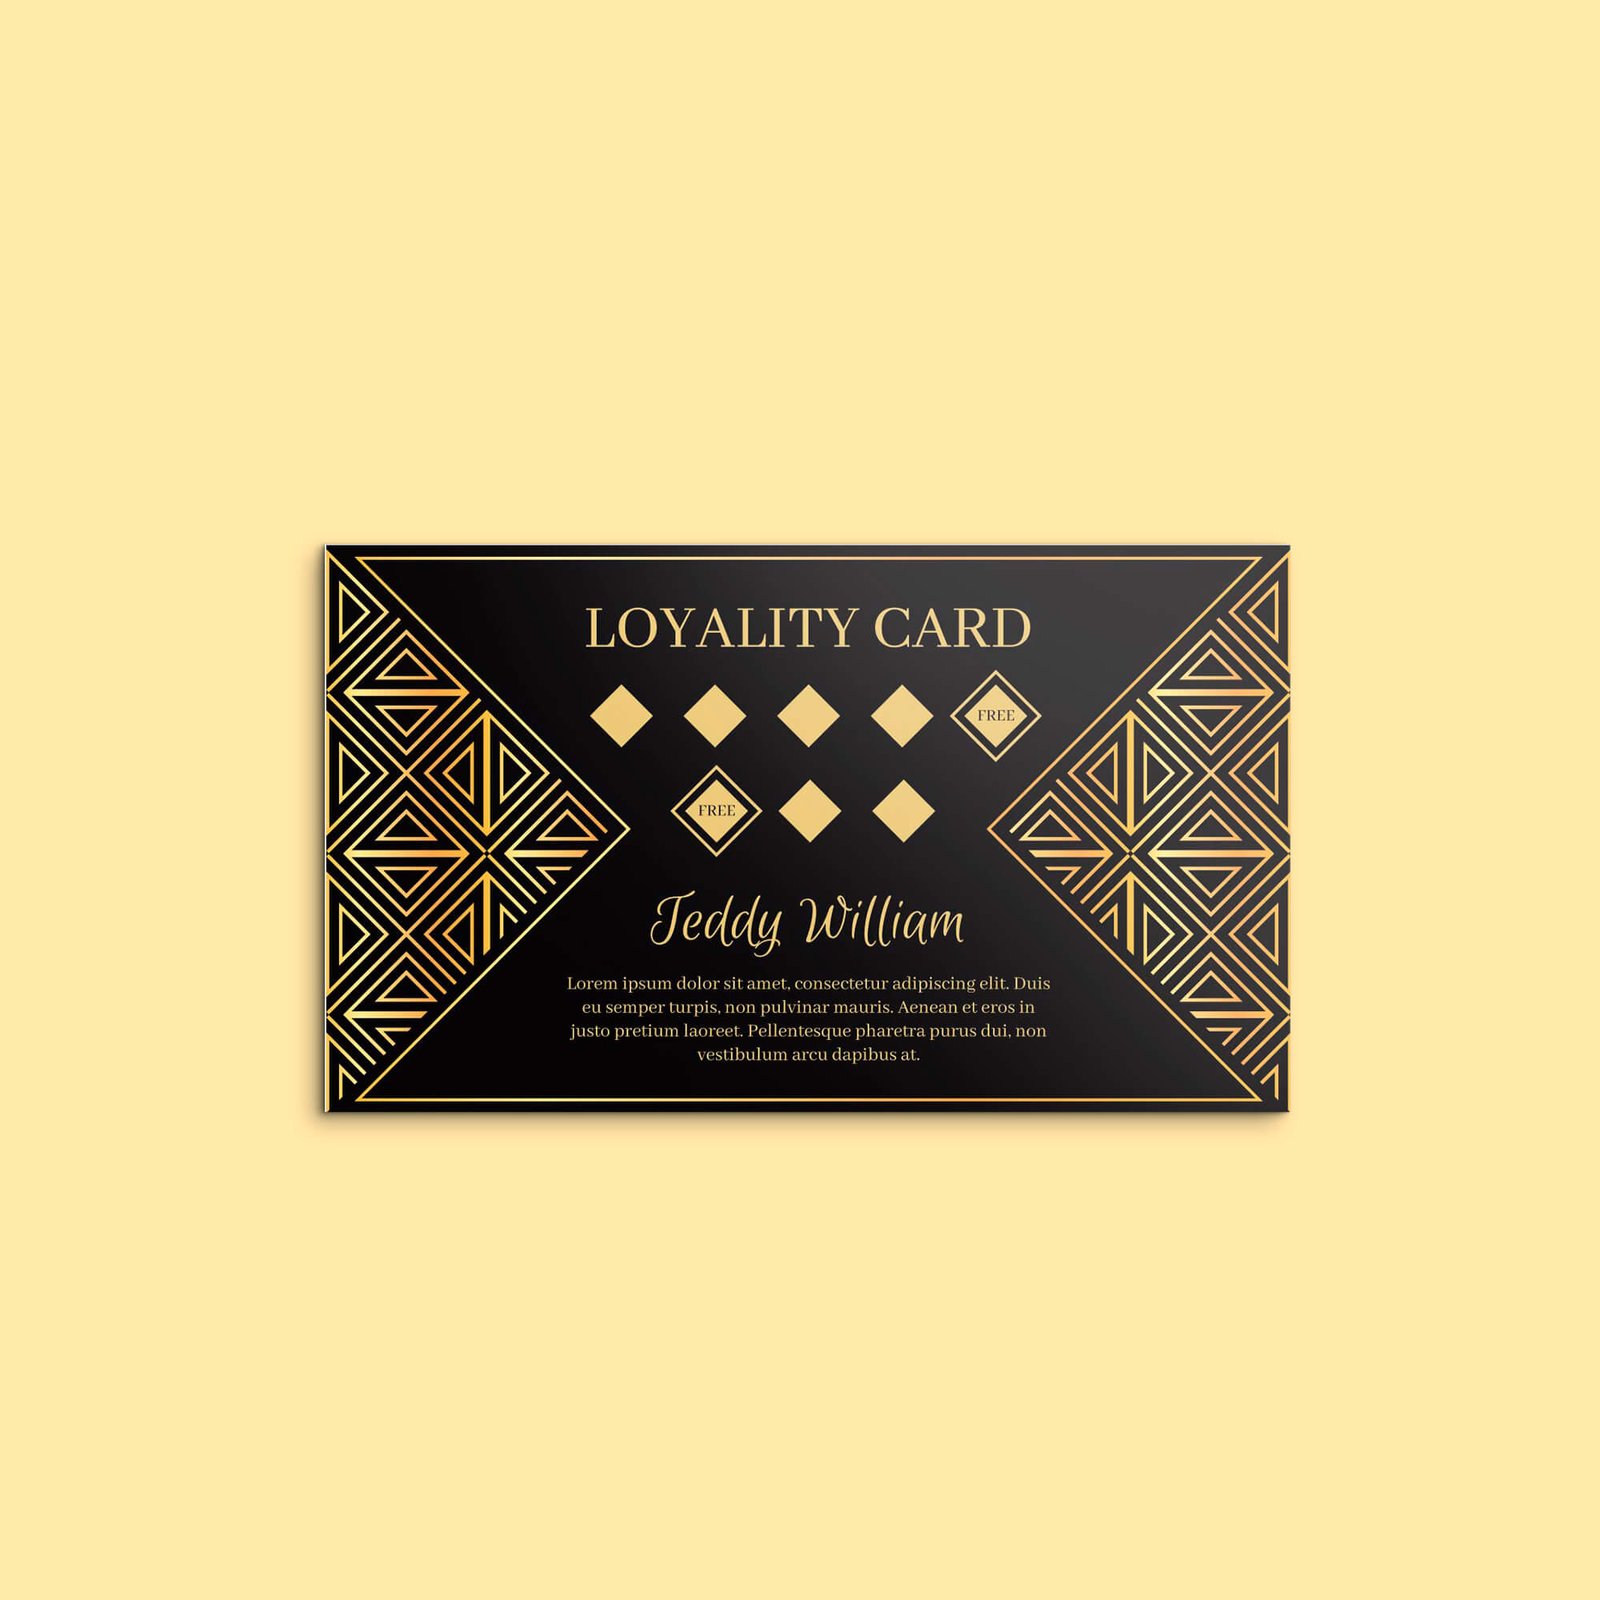 Design Free Loyalty Card Mockup PSD Template